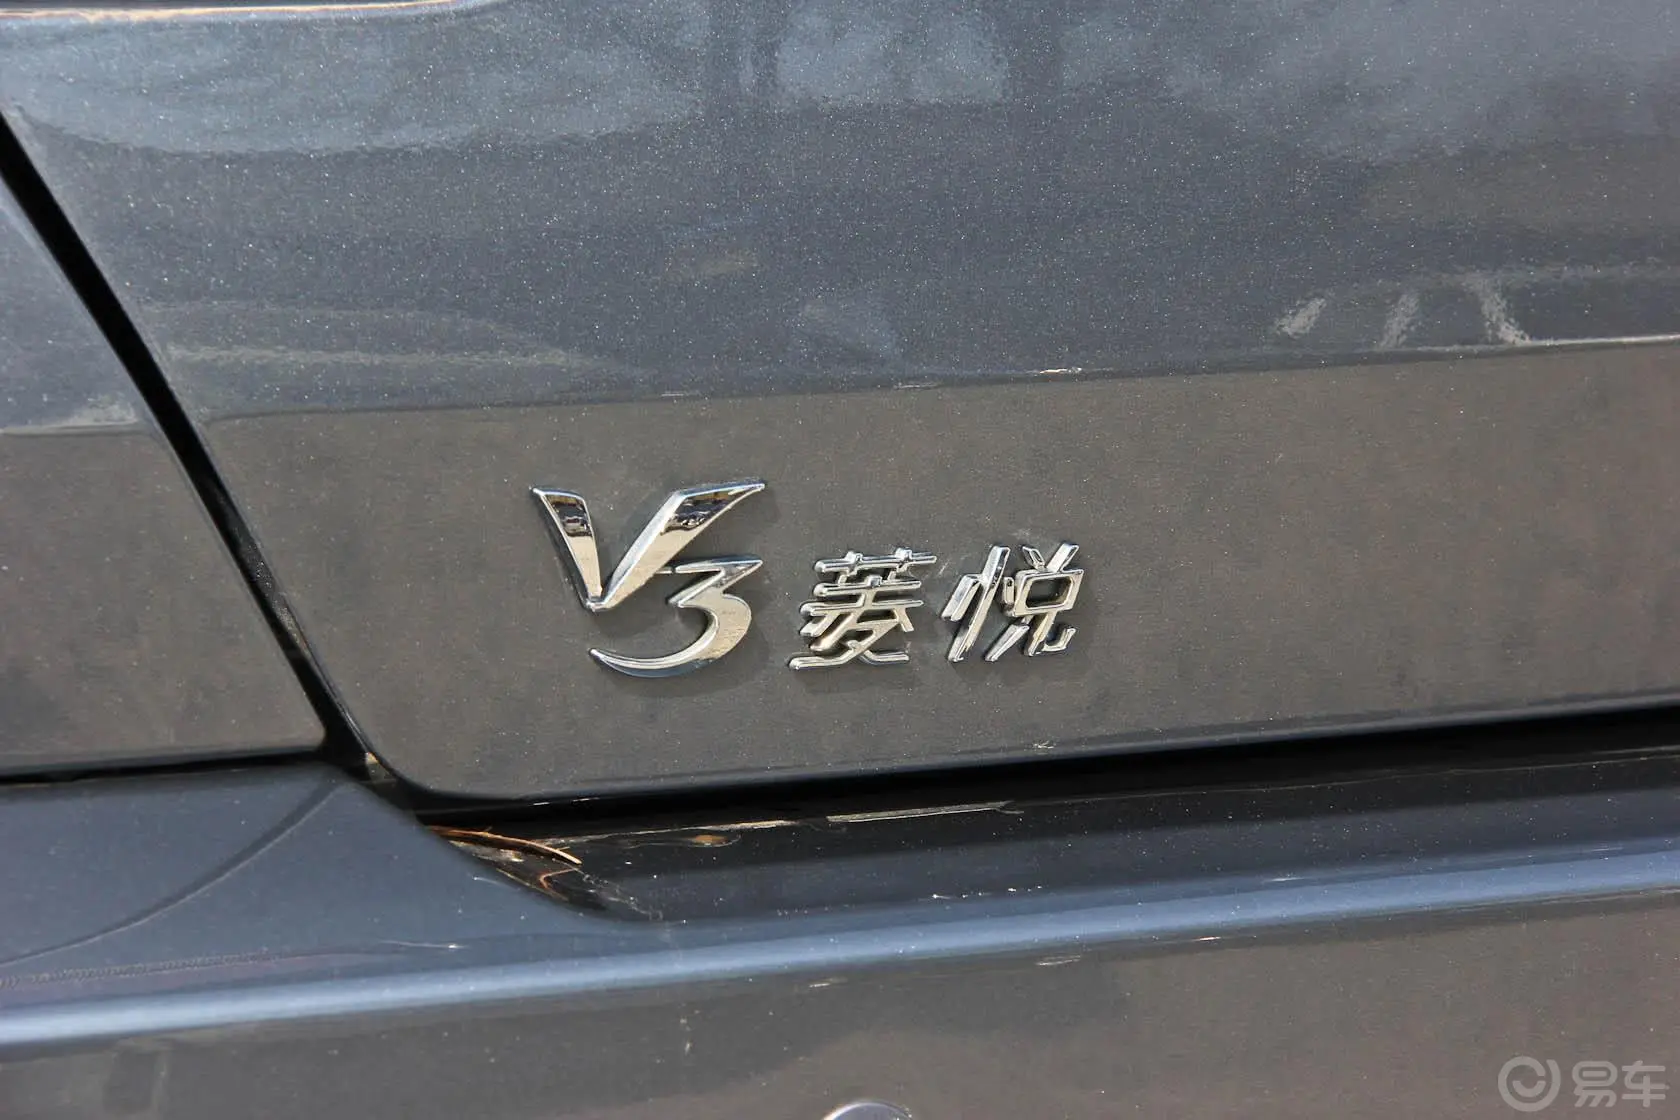 V3菱悦1.5L 手动 SEi 豪华版外观